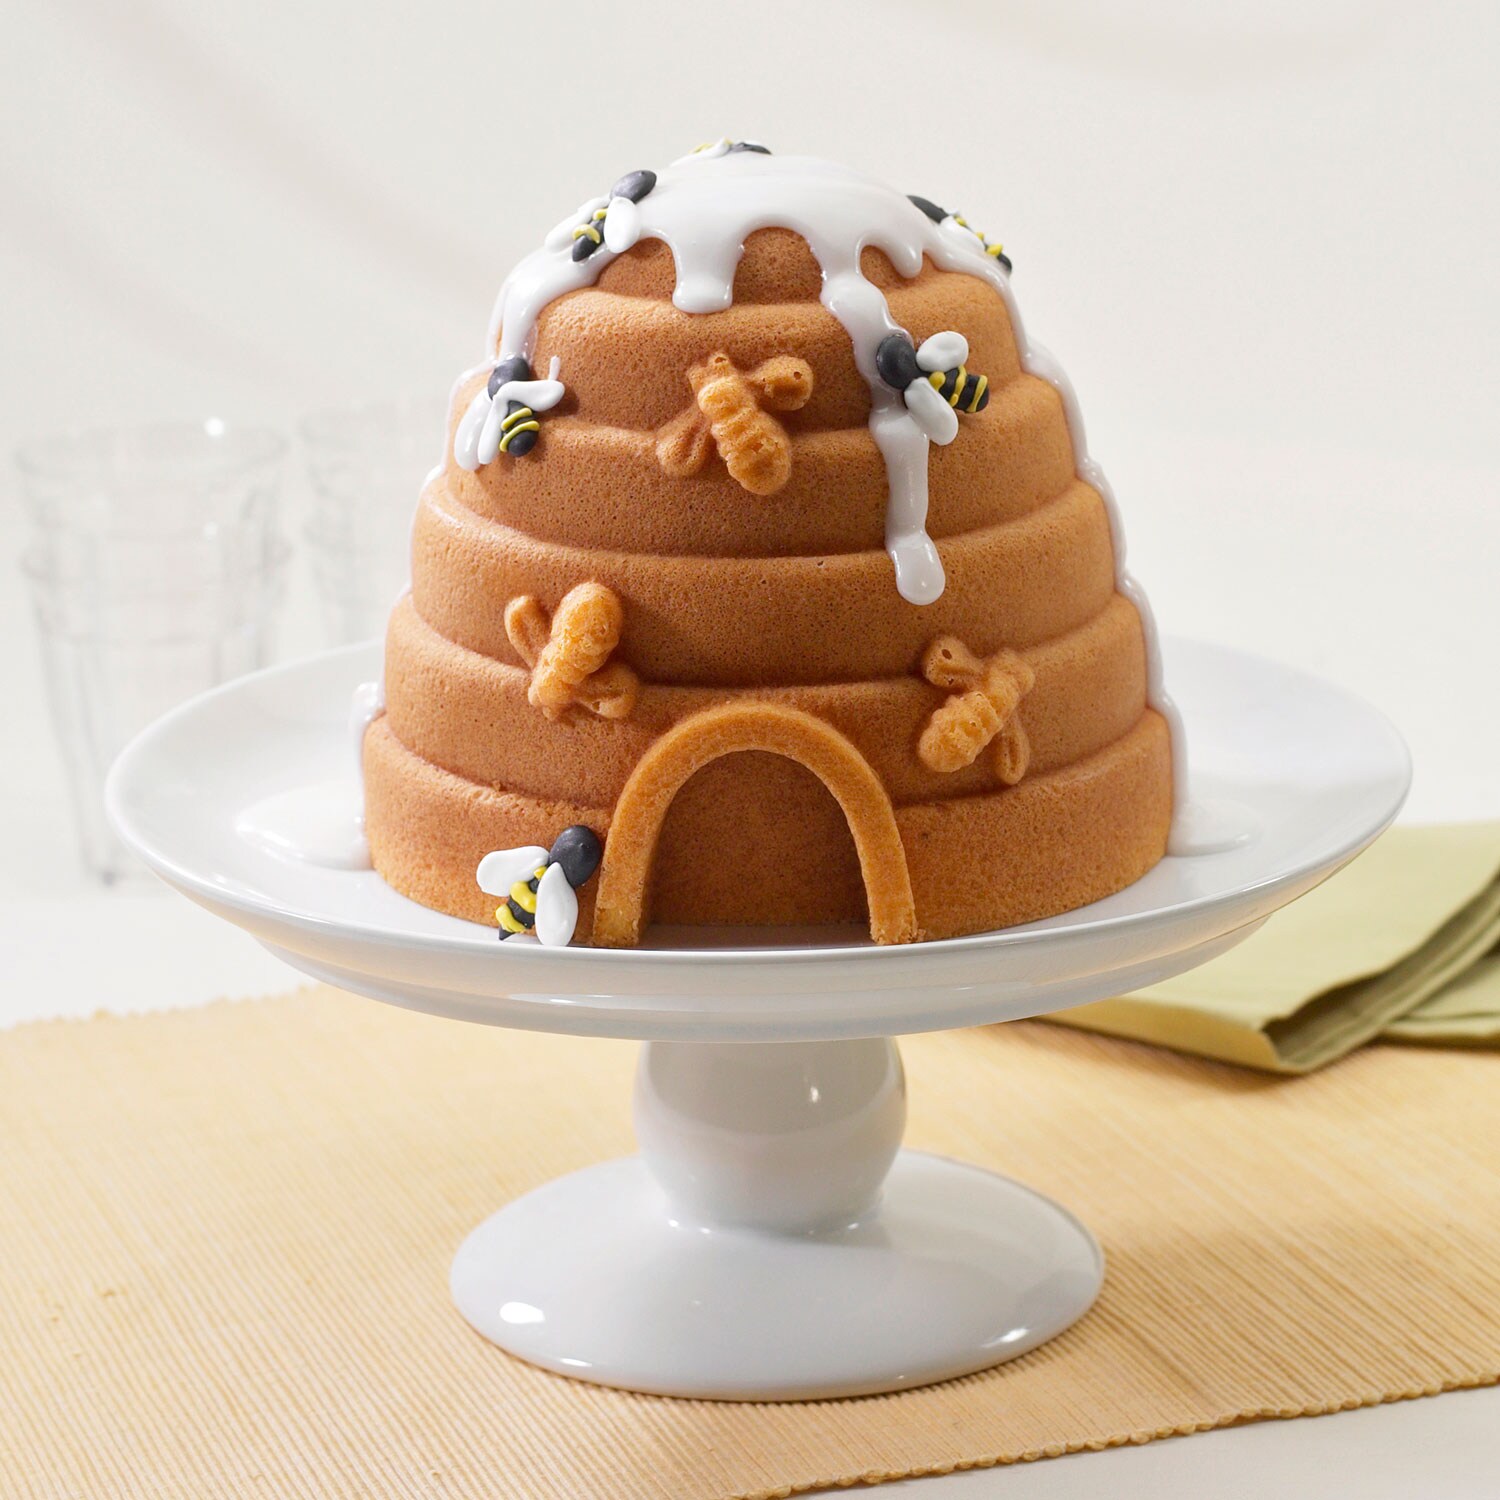 https://royaldesign.com/image/2/nordic-ware-nordic-ware-beehive-cake-bundt-pan-1